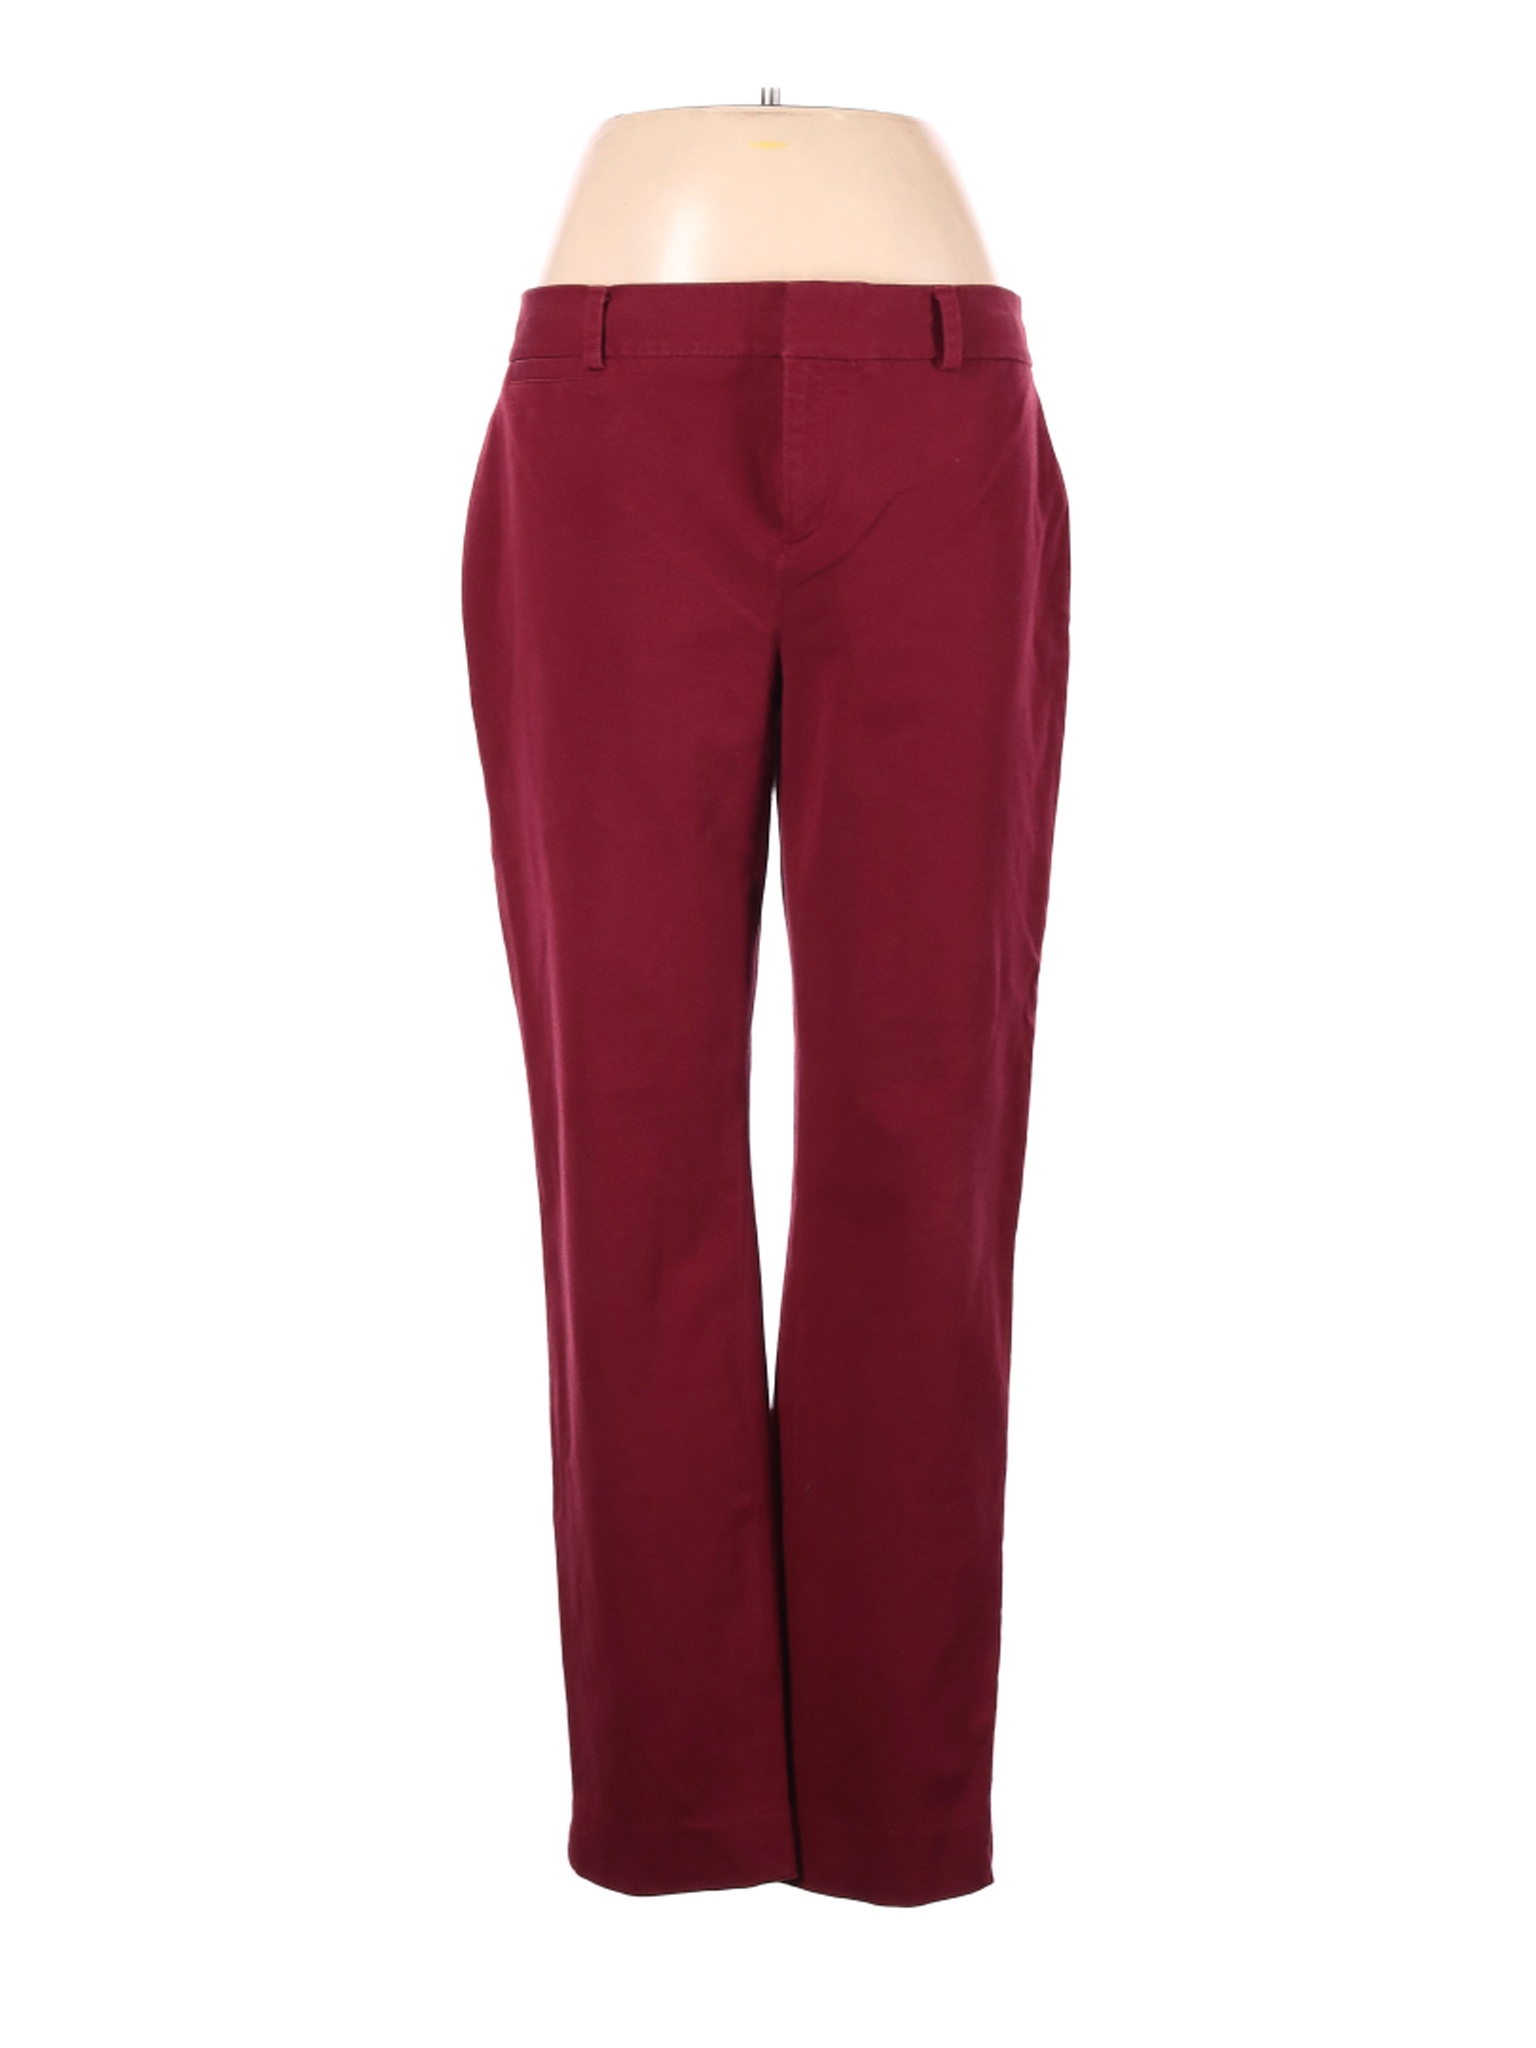 Crown & Ivy Women Red Casual Pants 8 | eBay